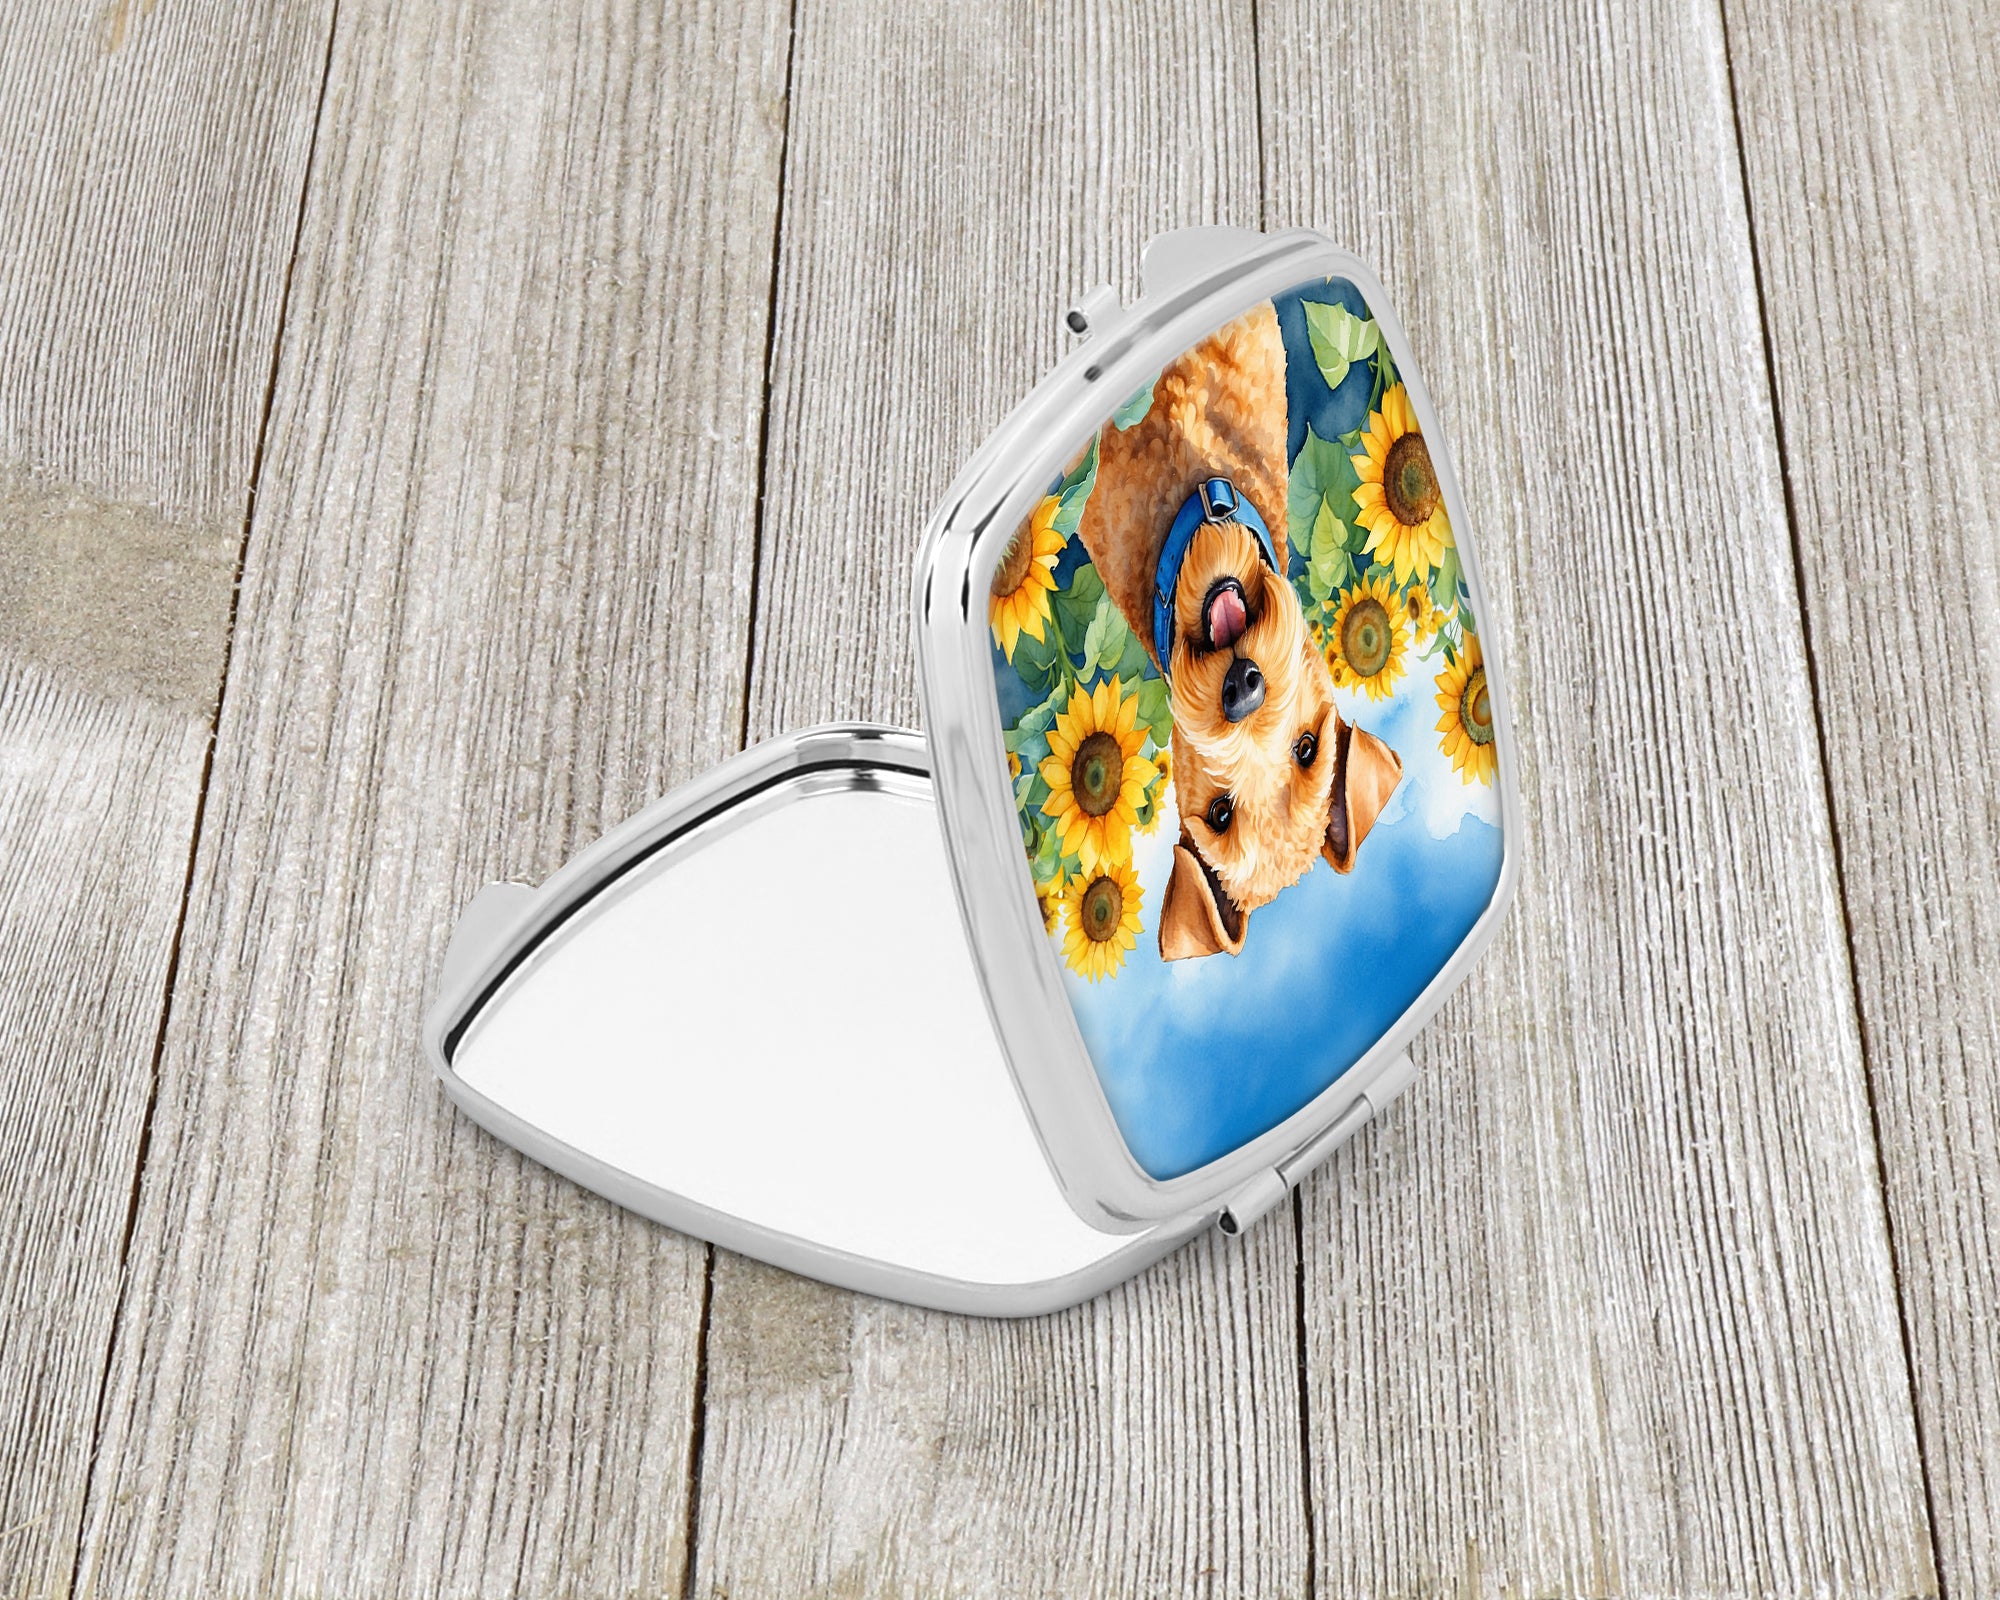 Lakeland Terrier in Sunflowers Compact Mirror